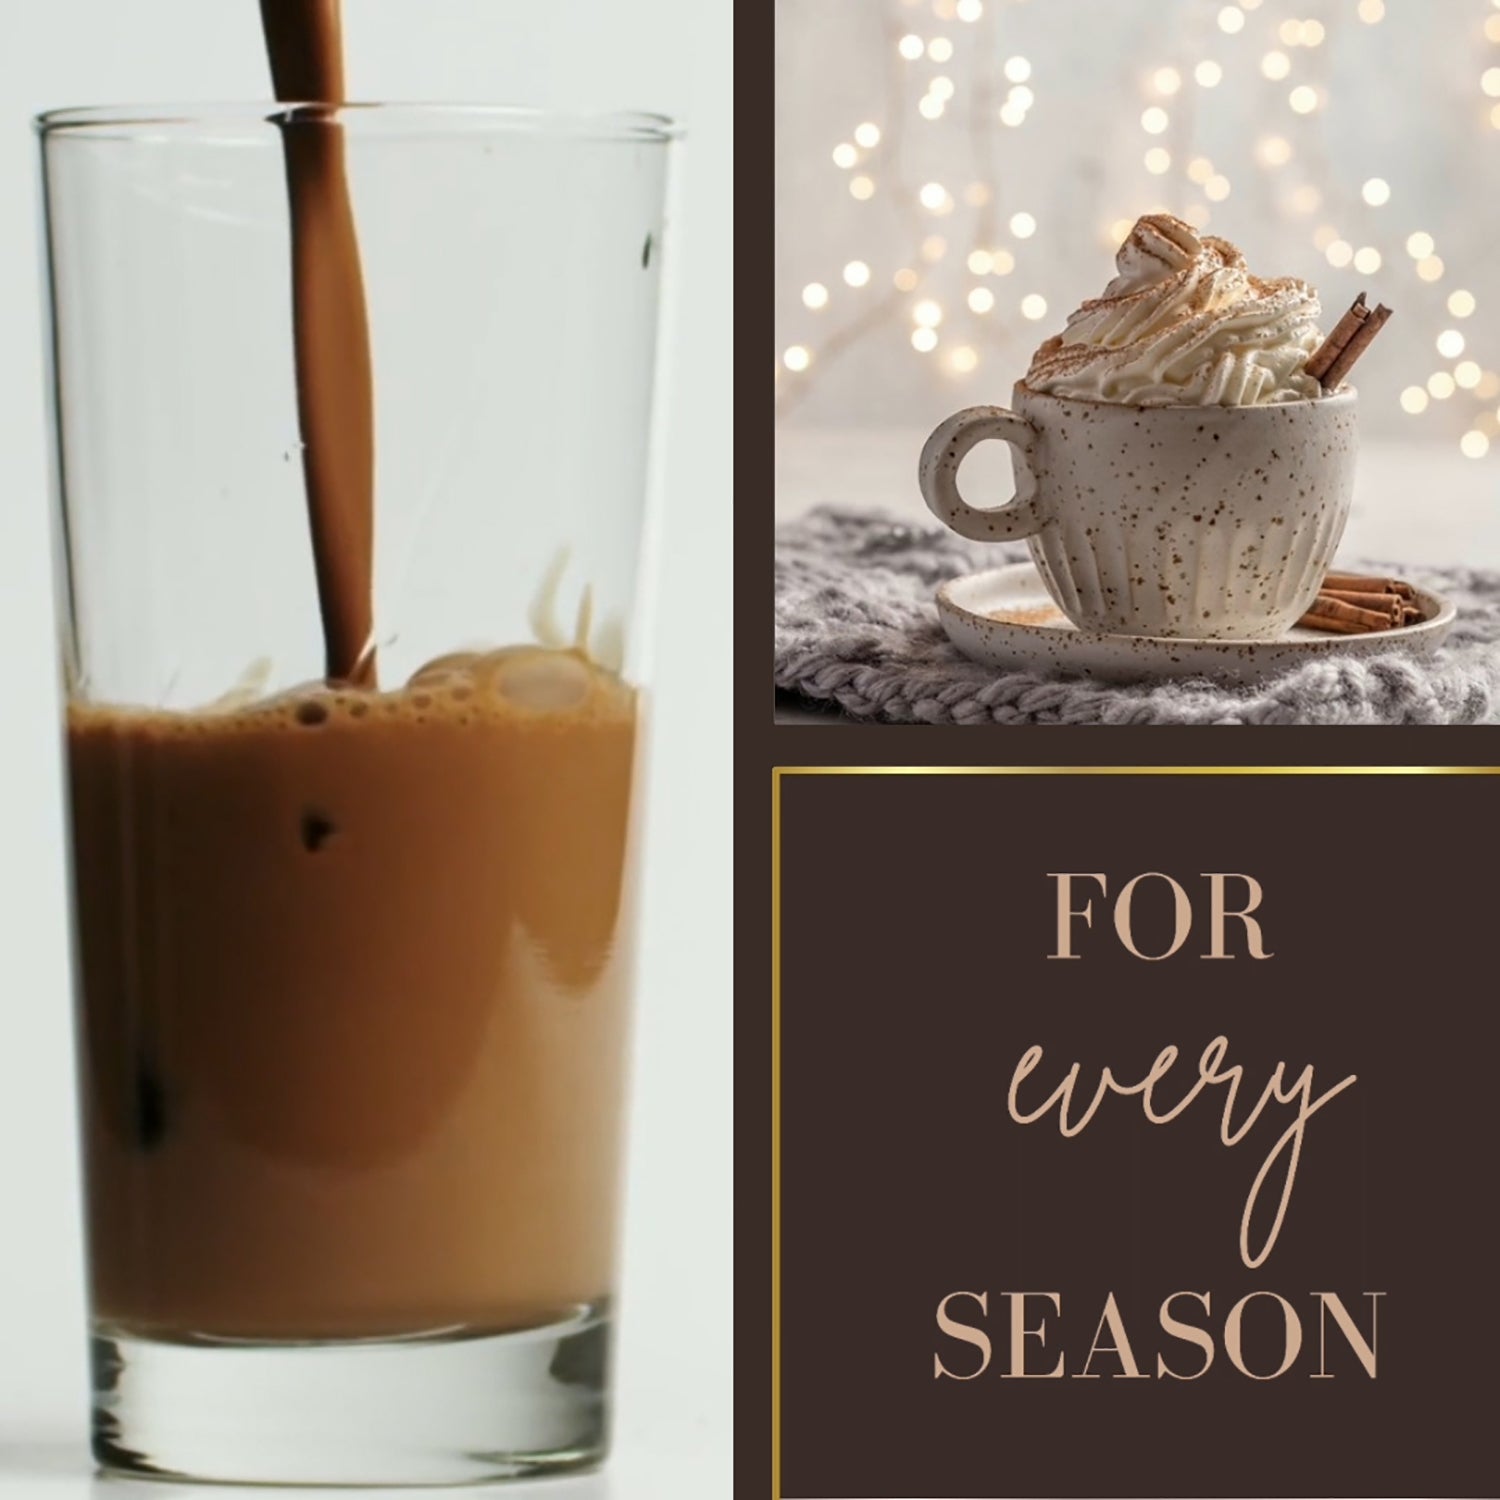 Sugar Free Drinking Chocolate Mix - Cocosutra - All Season Drink